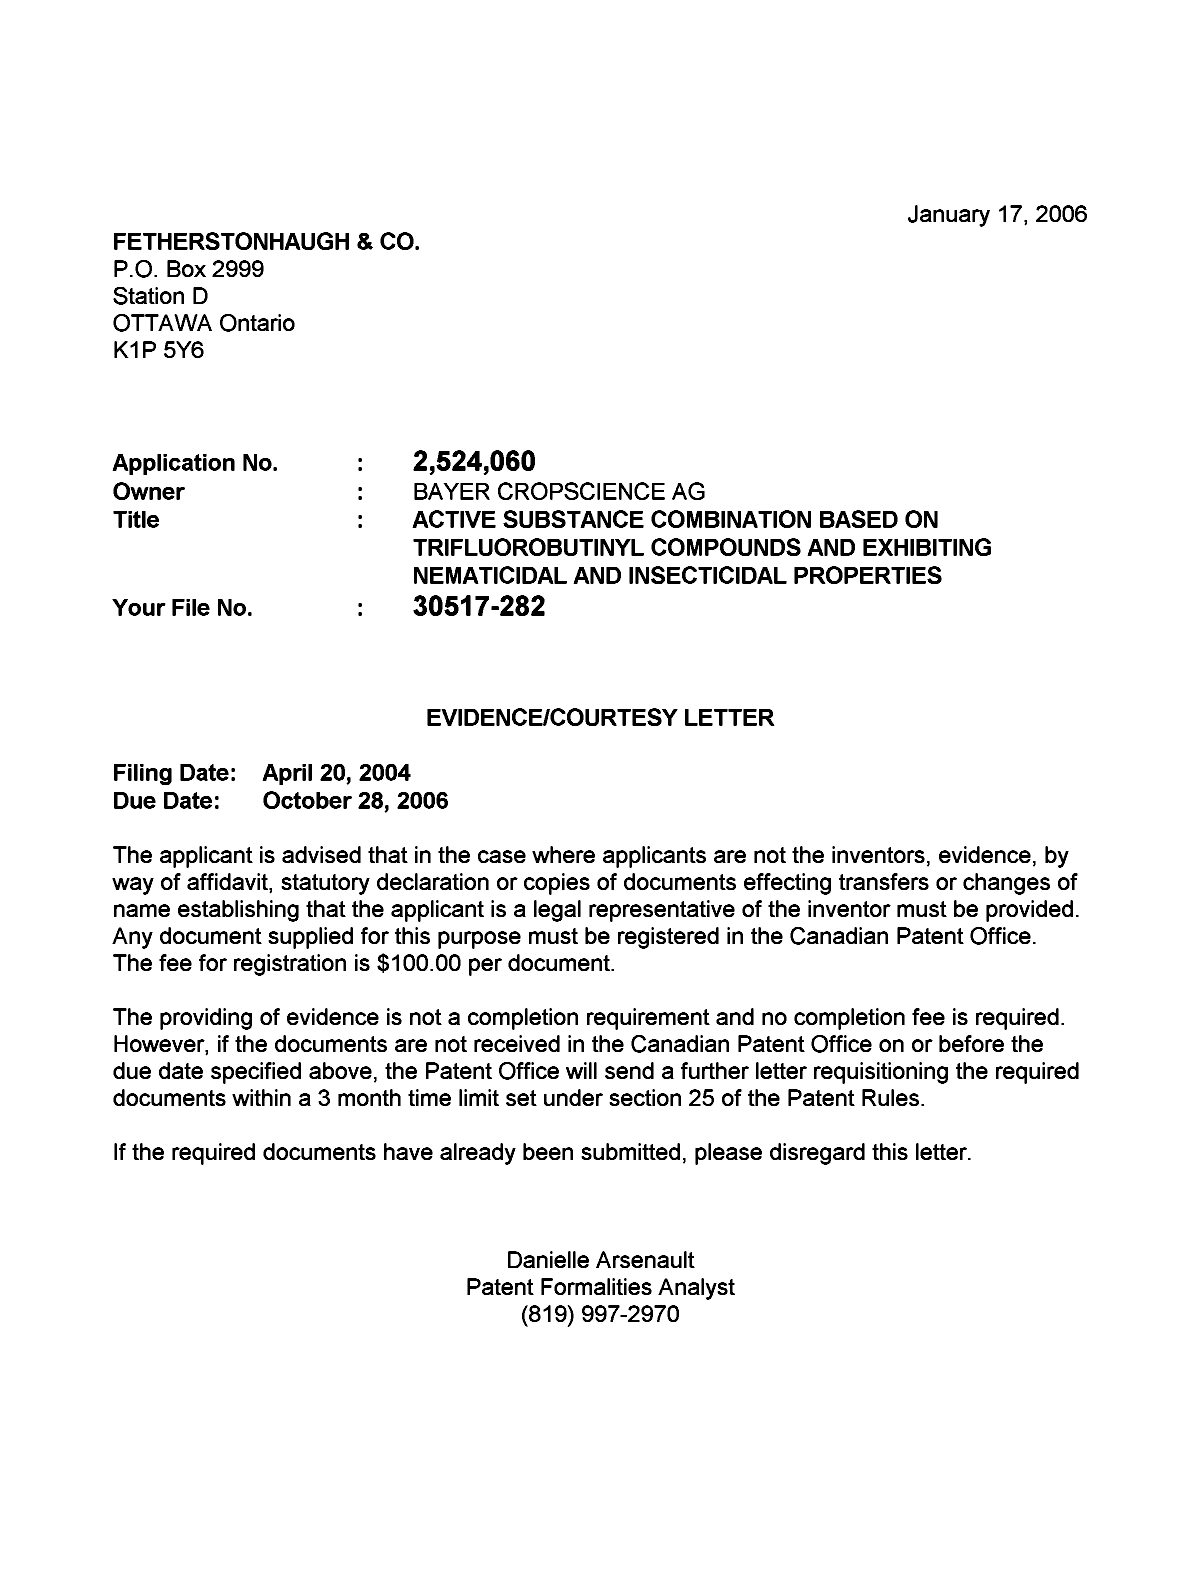 Canadian Patent Document 2524060. Correspondence 20060110. Image 1 of 1